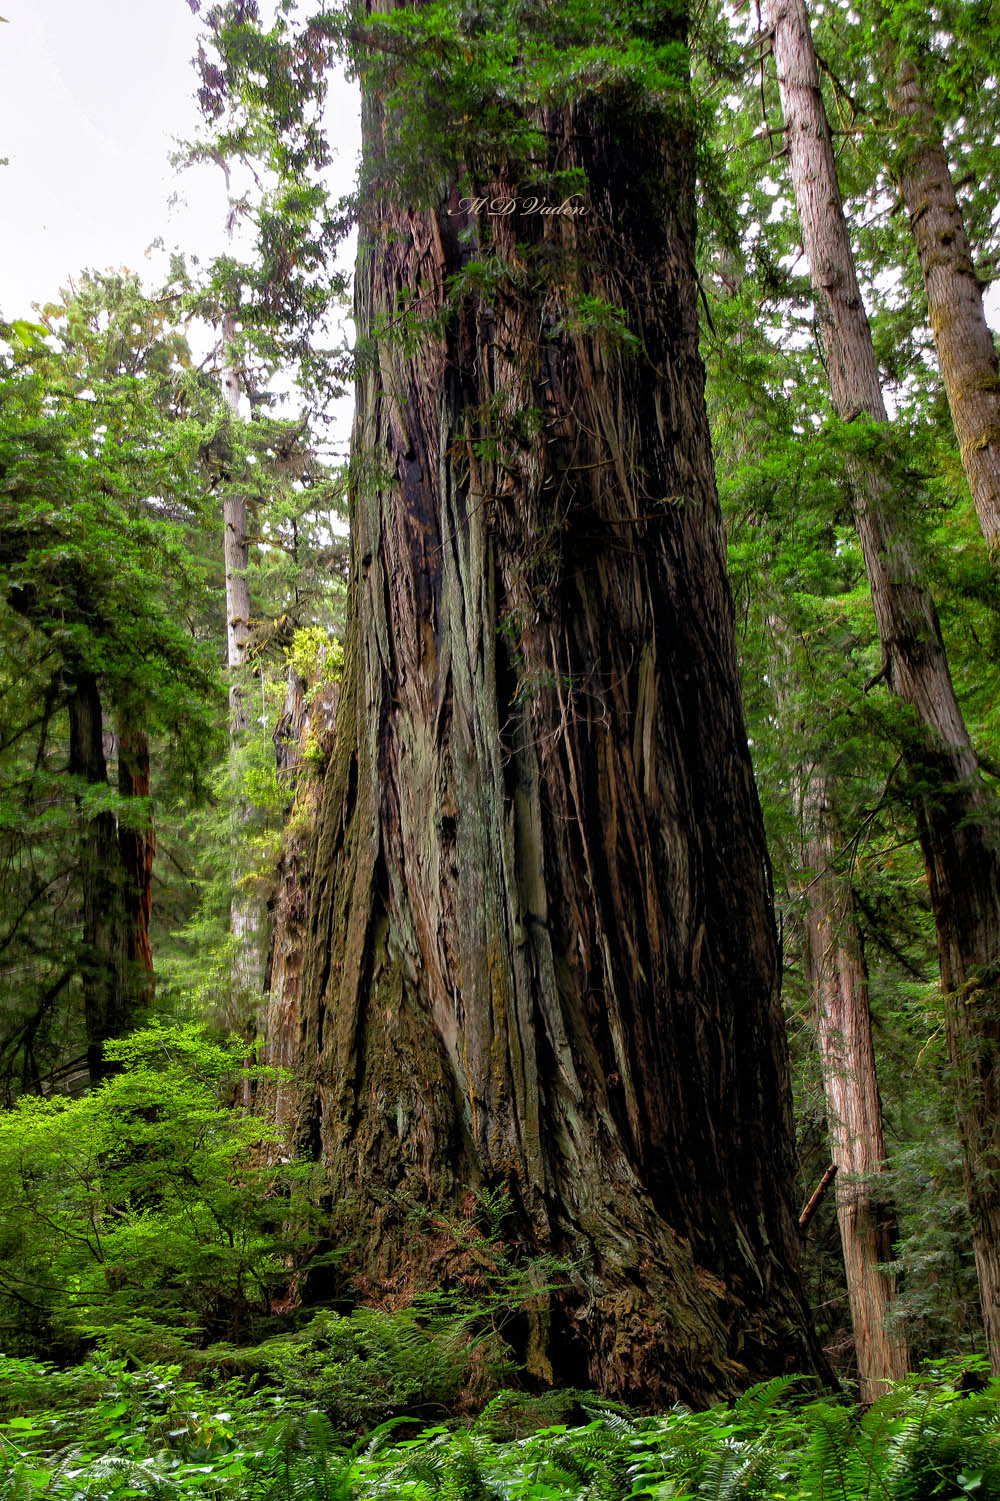 Terex Titan redwood near Redwood National Park showing half the trunk